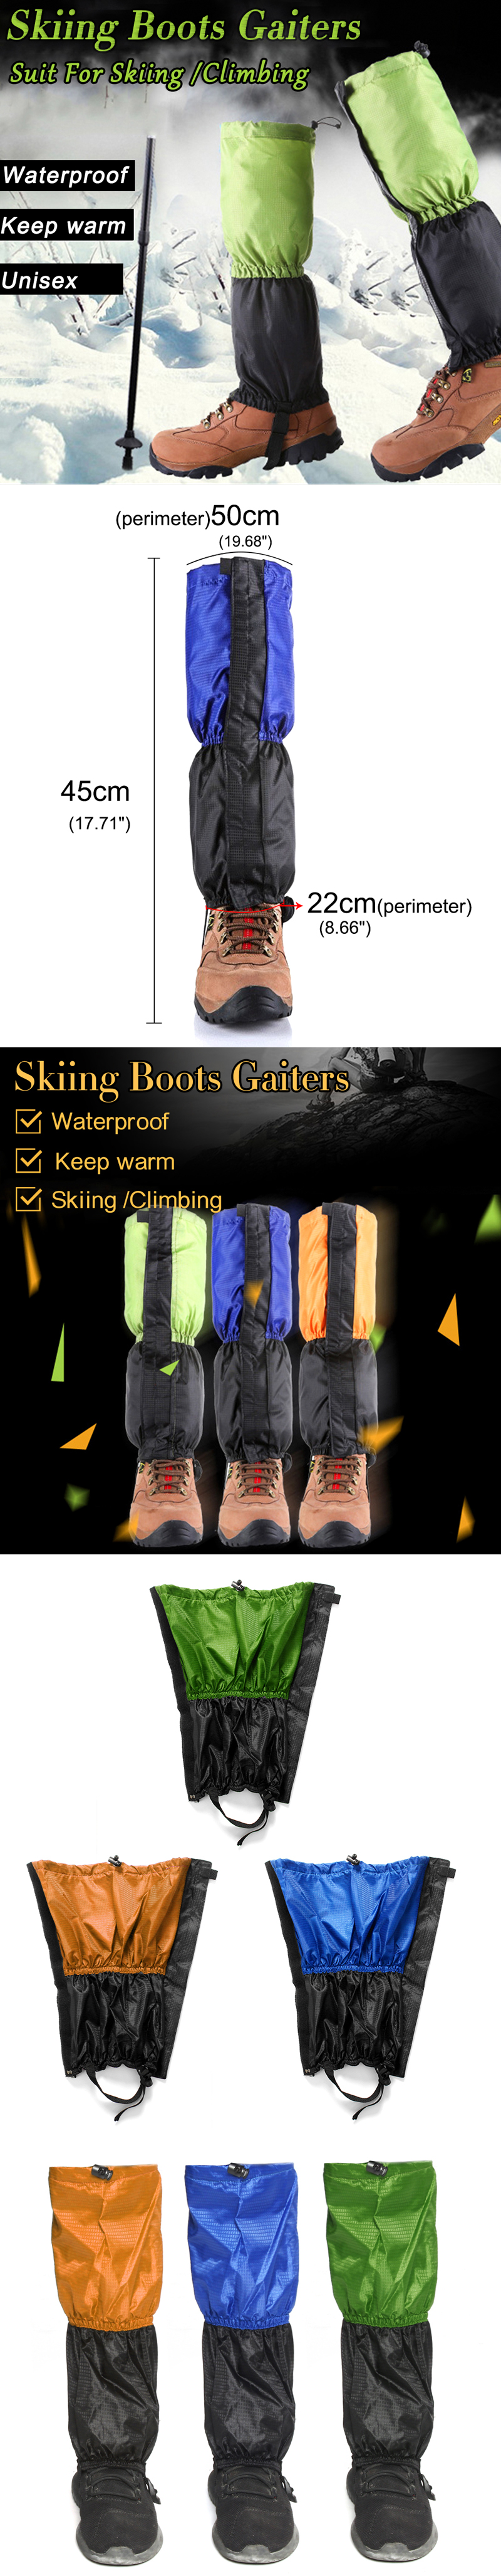 1-Pair-Shoe-Gaiters-Waterproof-Walking-Boot-Warm-Covers-Camping-Hiking-Trekking-Climbing-Snow-Leggin-1424371-1